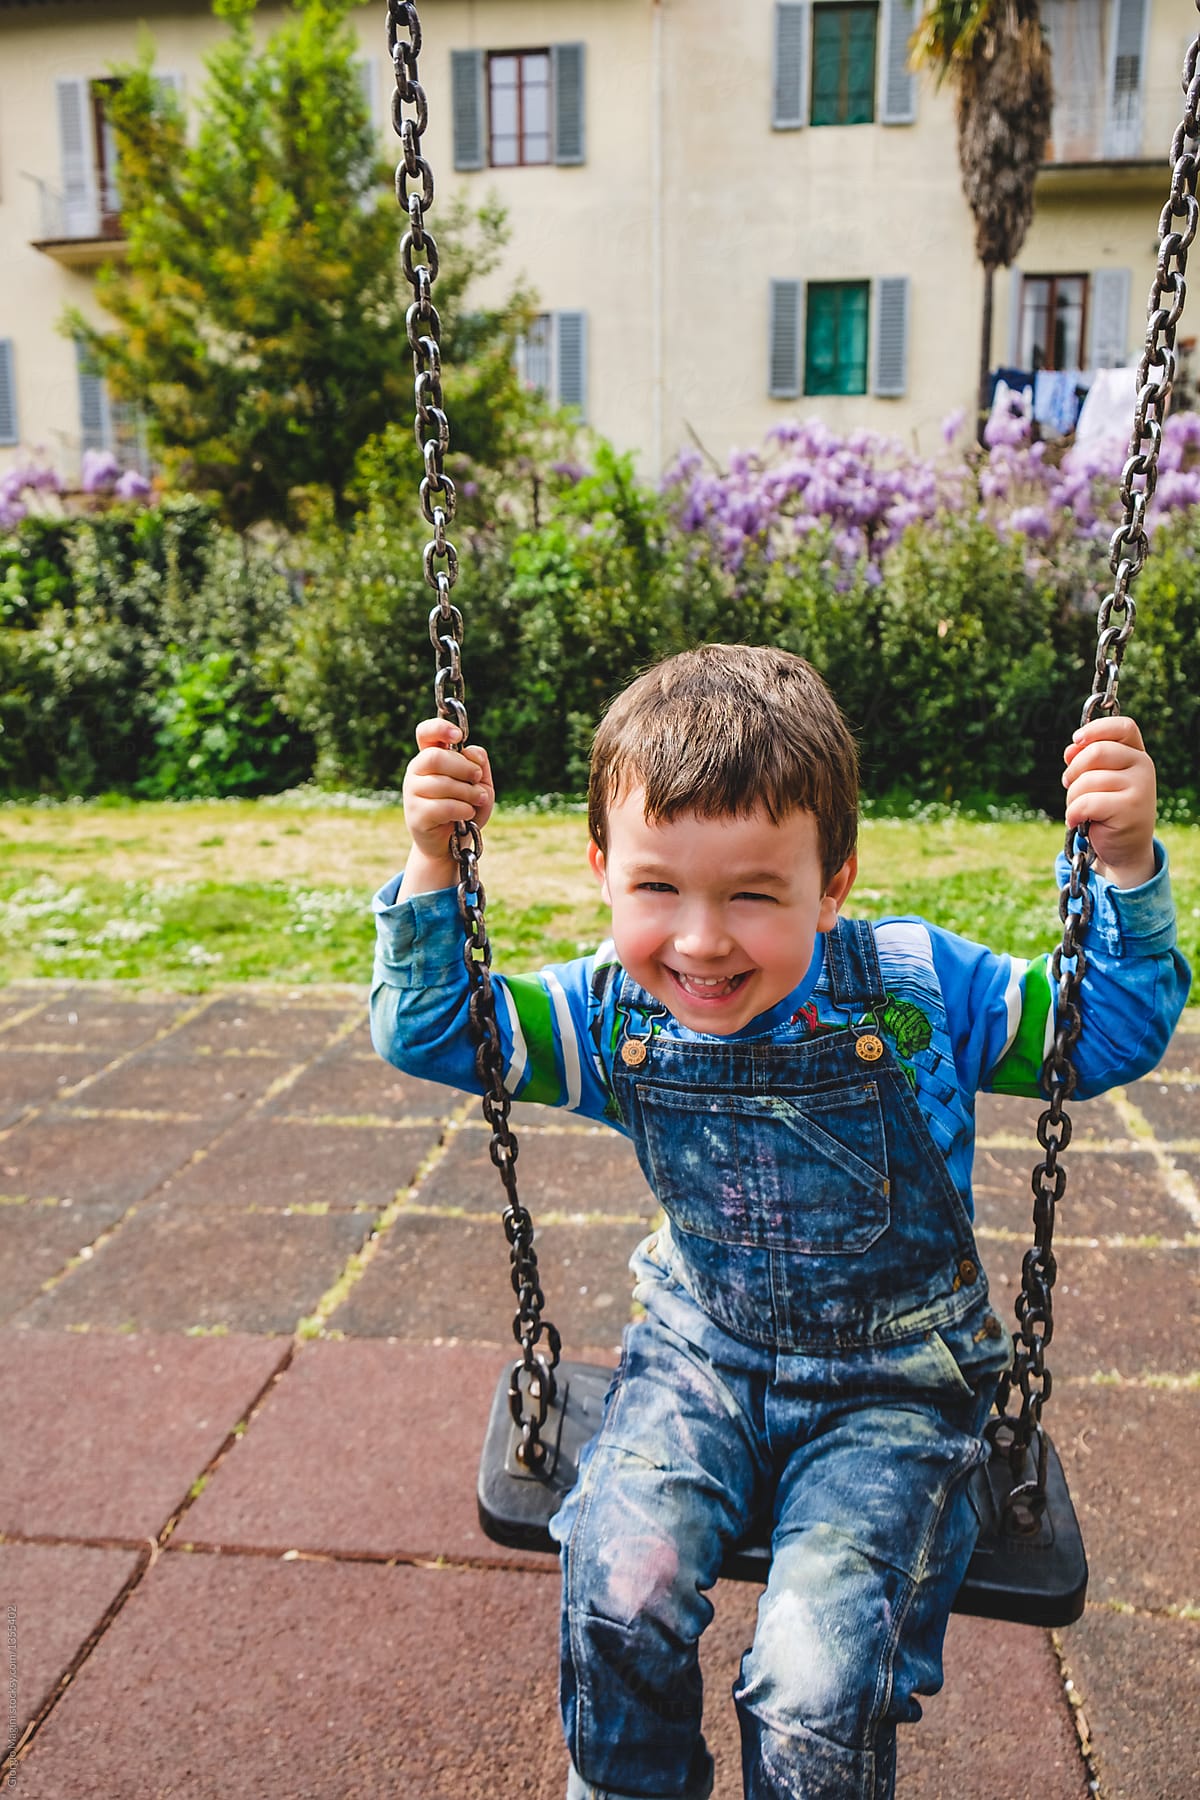 Preschooler Boy Having Fun on a Swing at the Playground